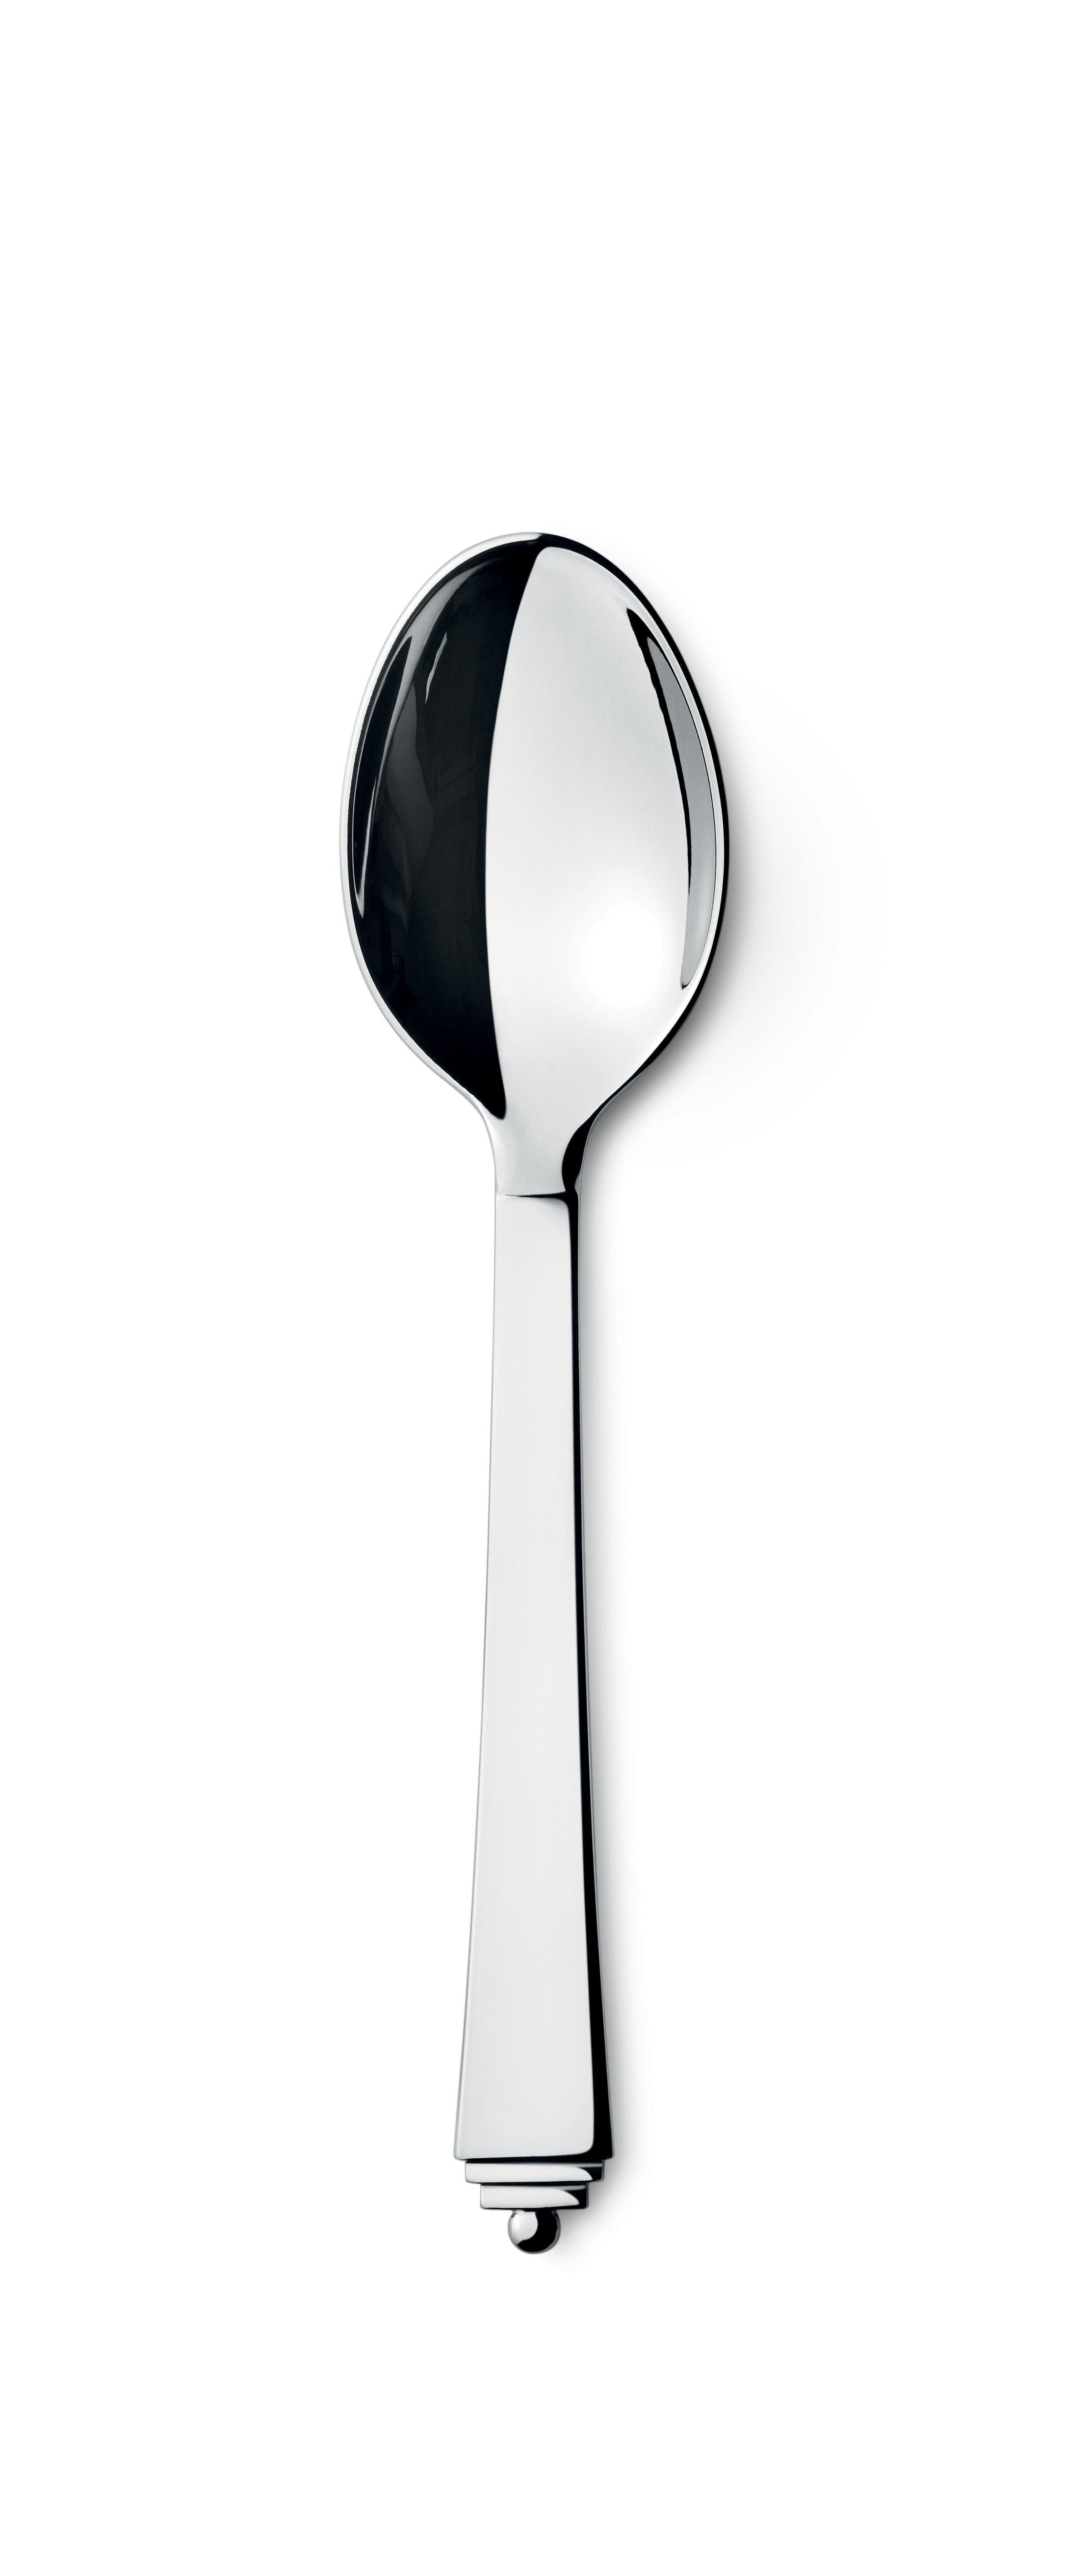 Stainless steel mirror finish dinner spoon.